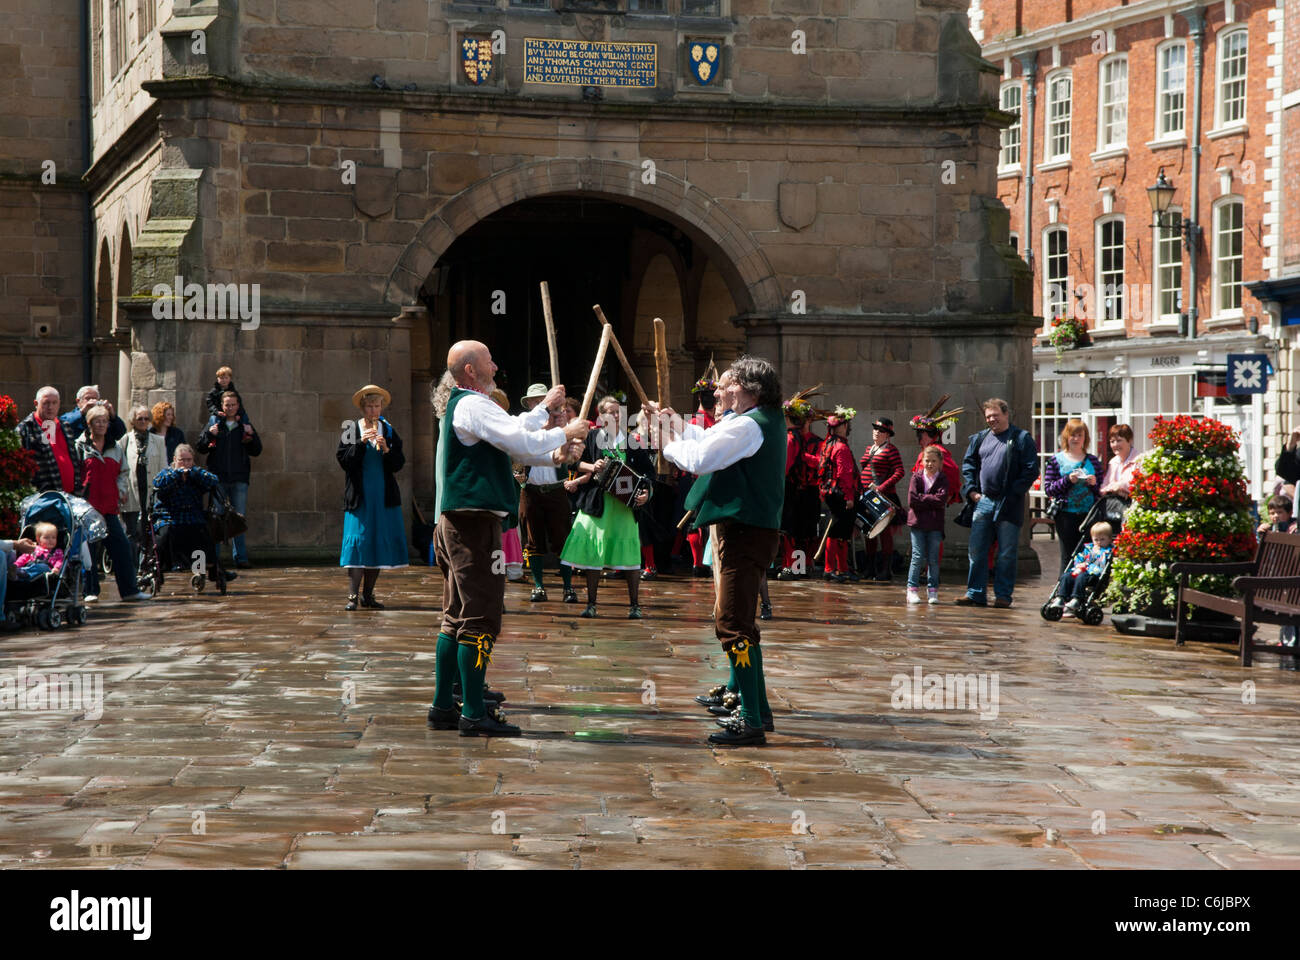 Shrewsbury Morris Dancers, Shrewsbury, Shropshire, England. Stockfoto